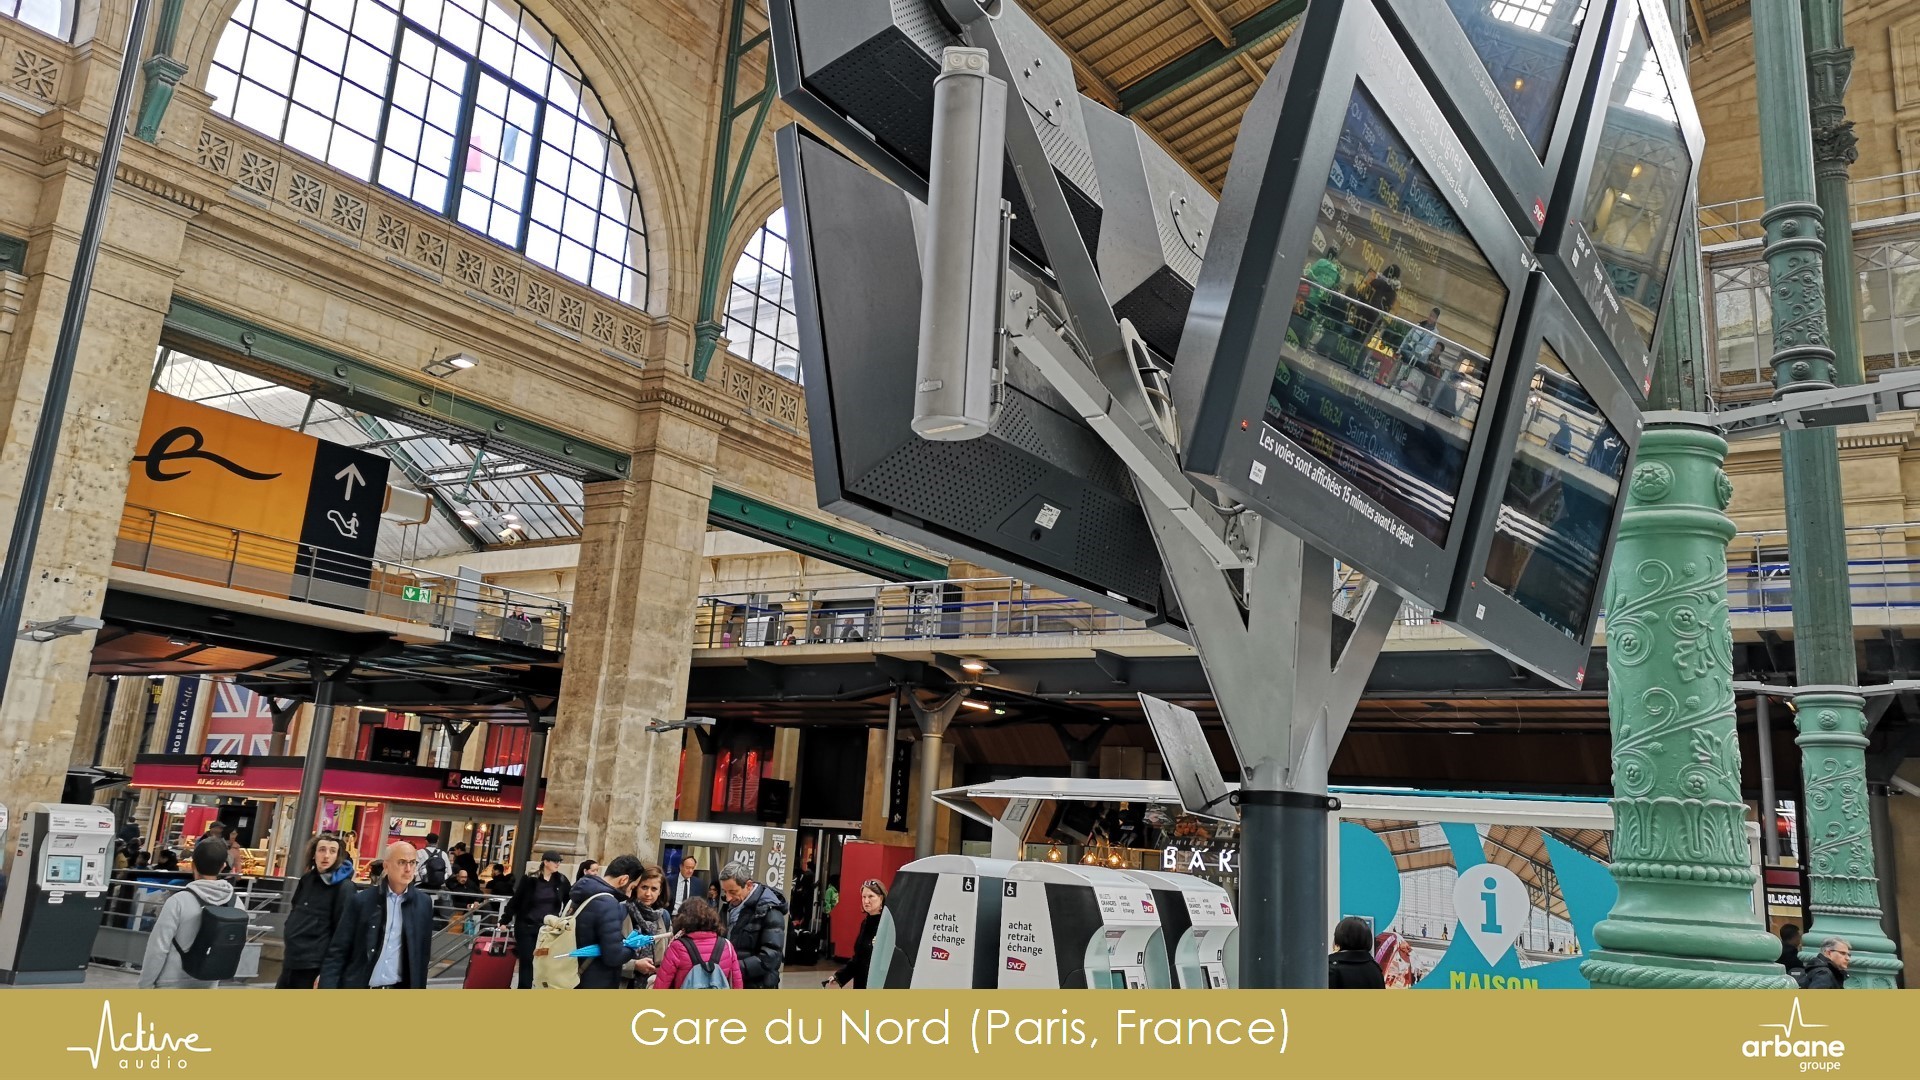 Paris-Nord Station, France